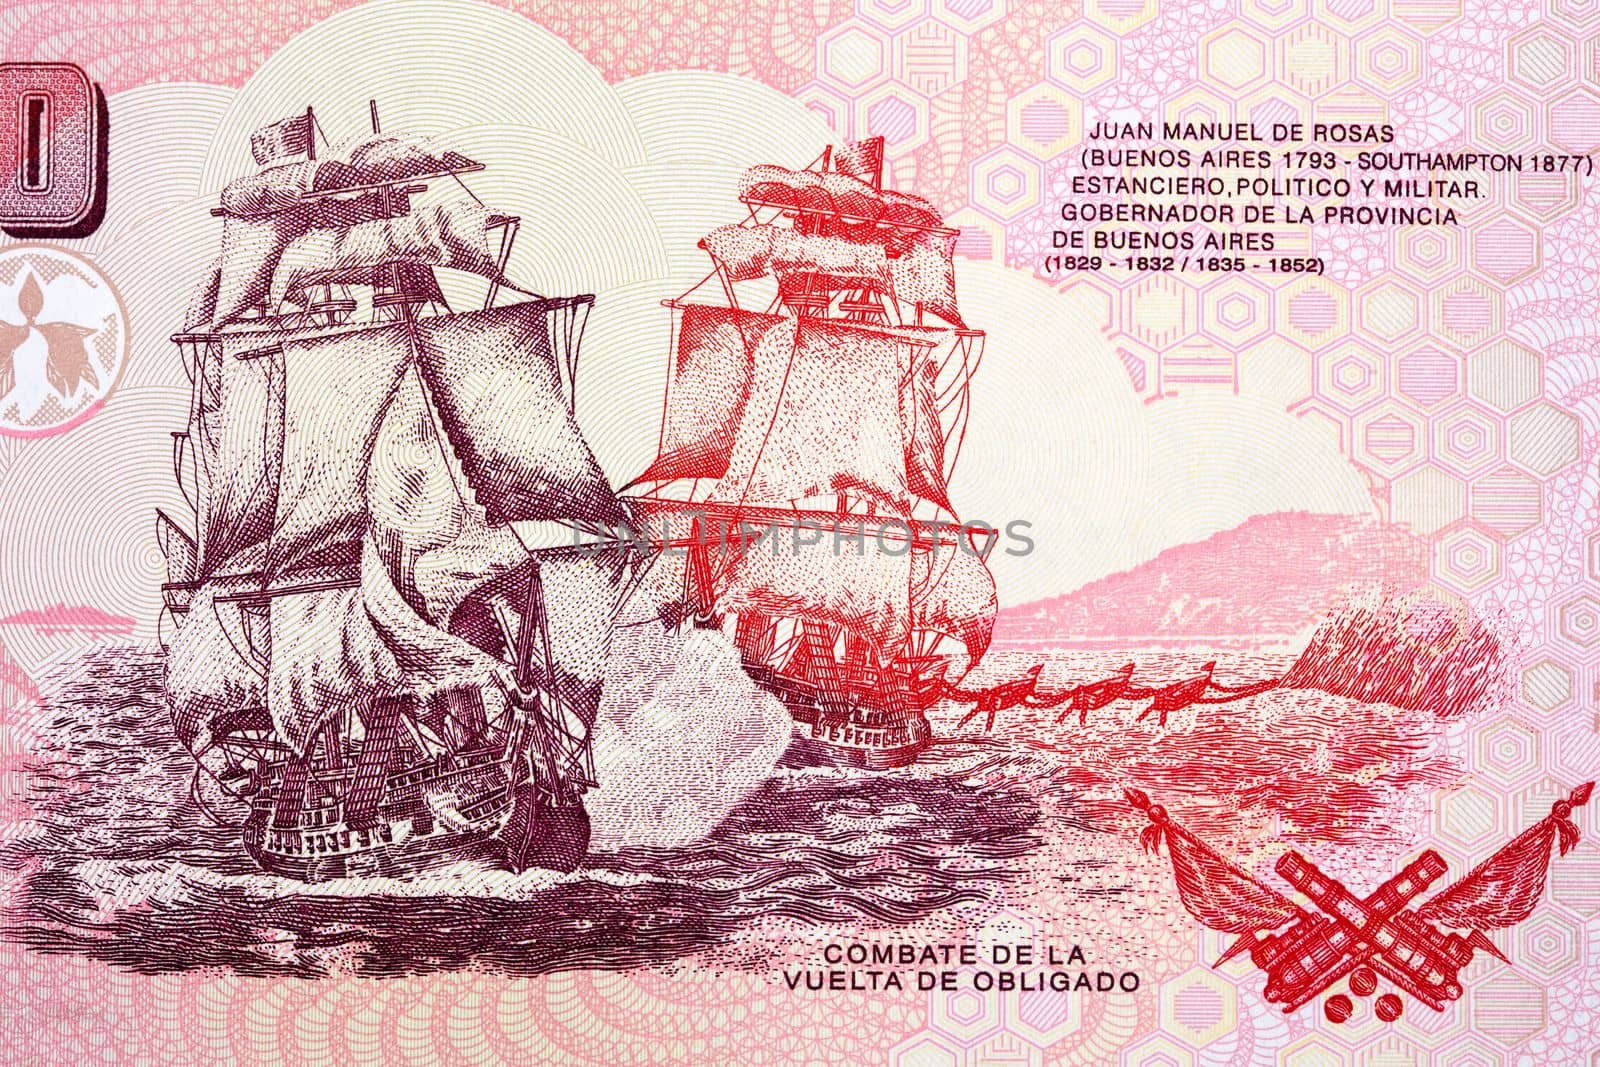 Sailing ships in the Battle of the Vuelta de Obligado on the Parana River